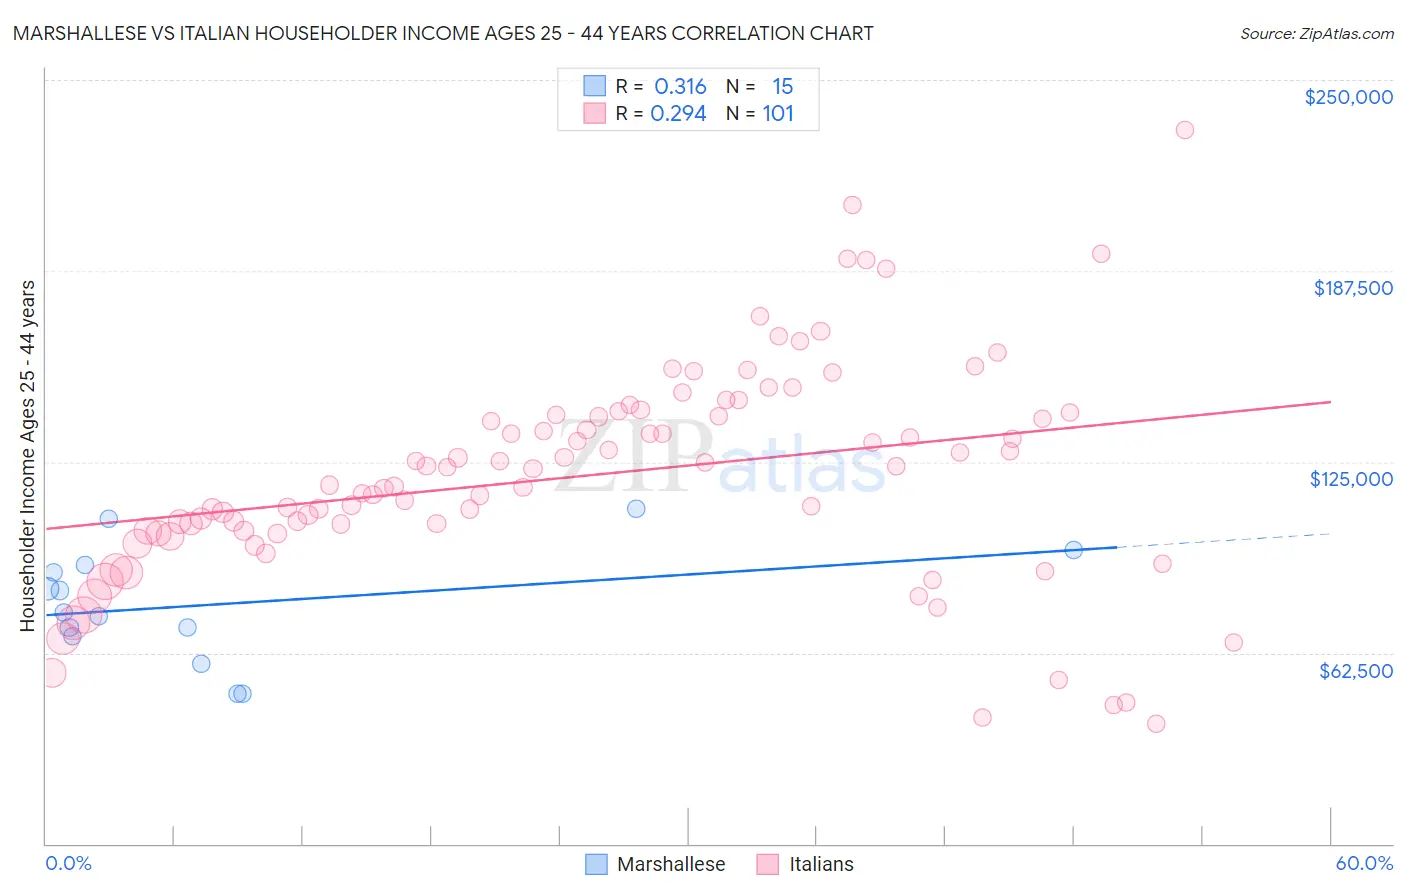 Marshallese vs Italian Householder Income Ages 25 - 44 years